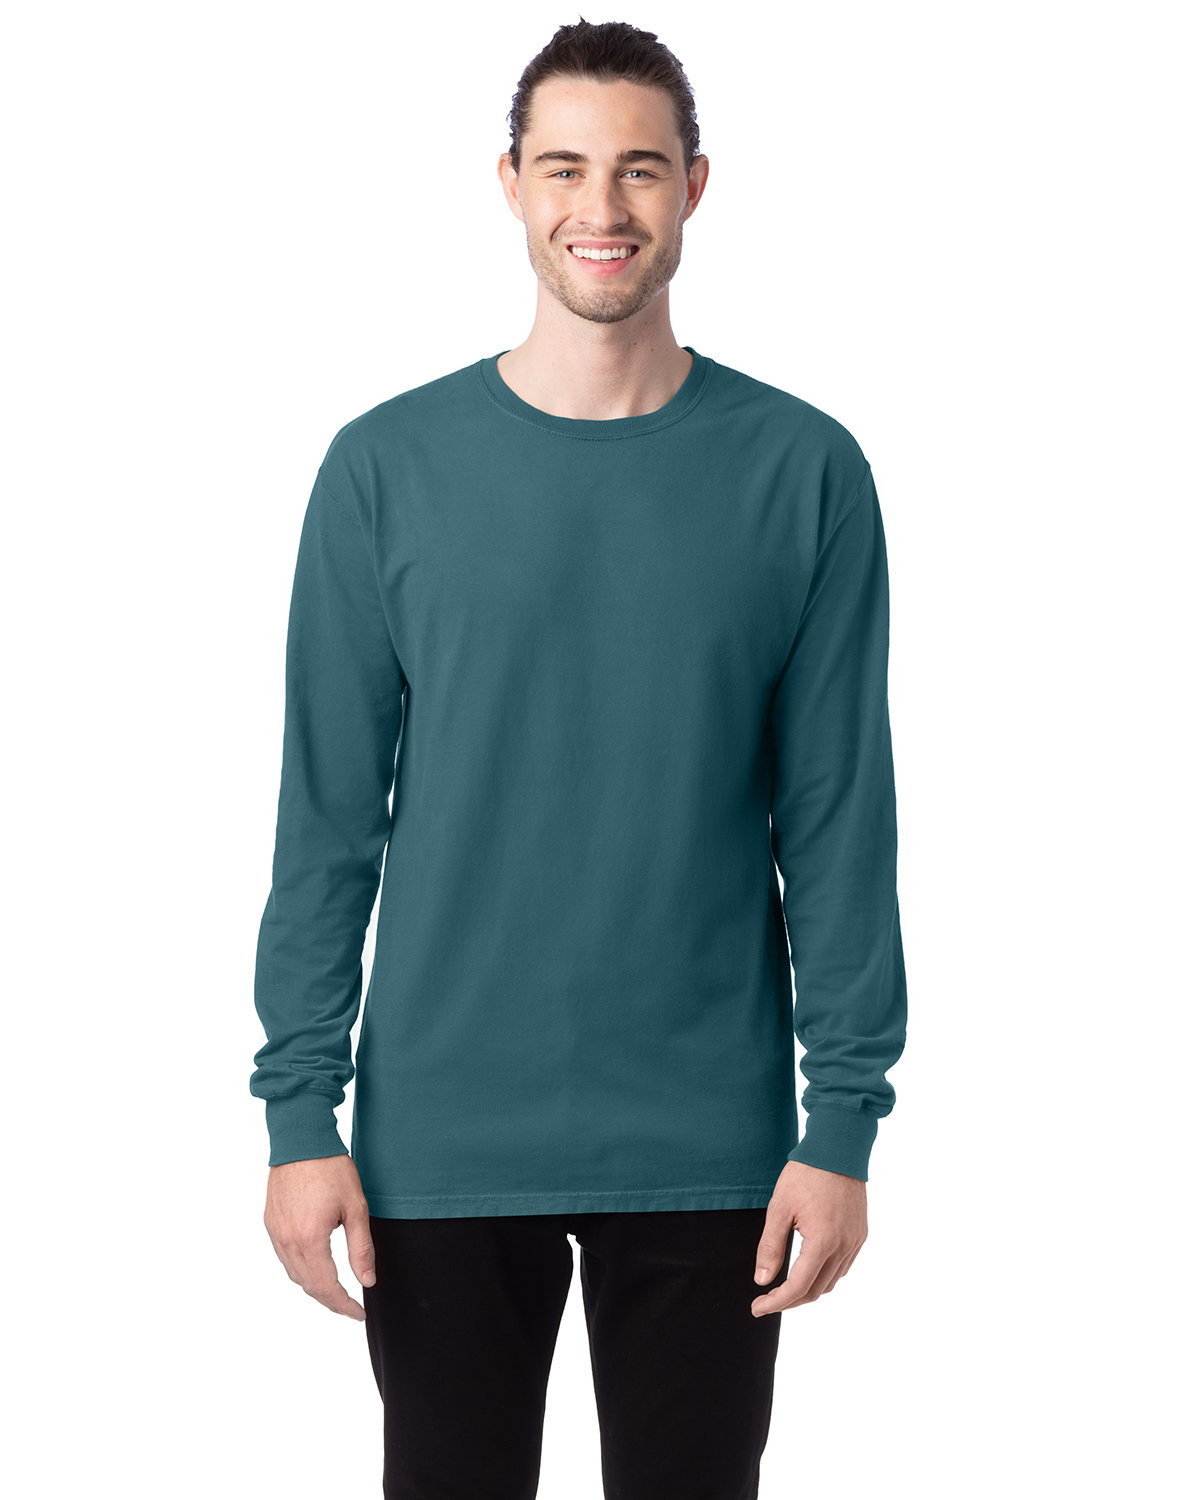 ComfortWash by Hanes Unisex Garment-Dyed Long-Sleeve T-Shirt CACTUS 